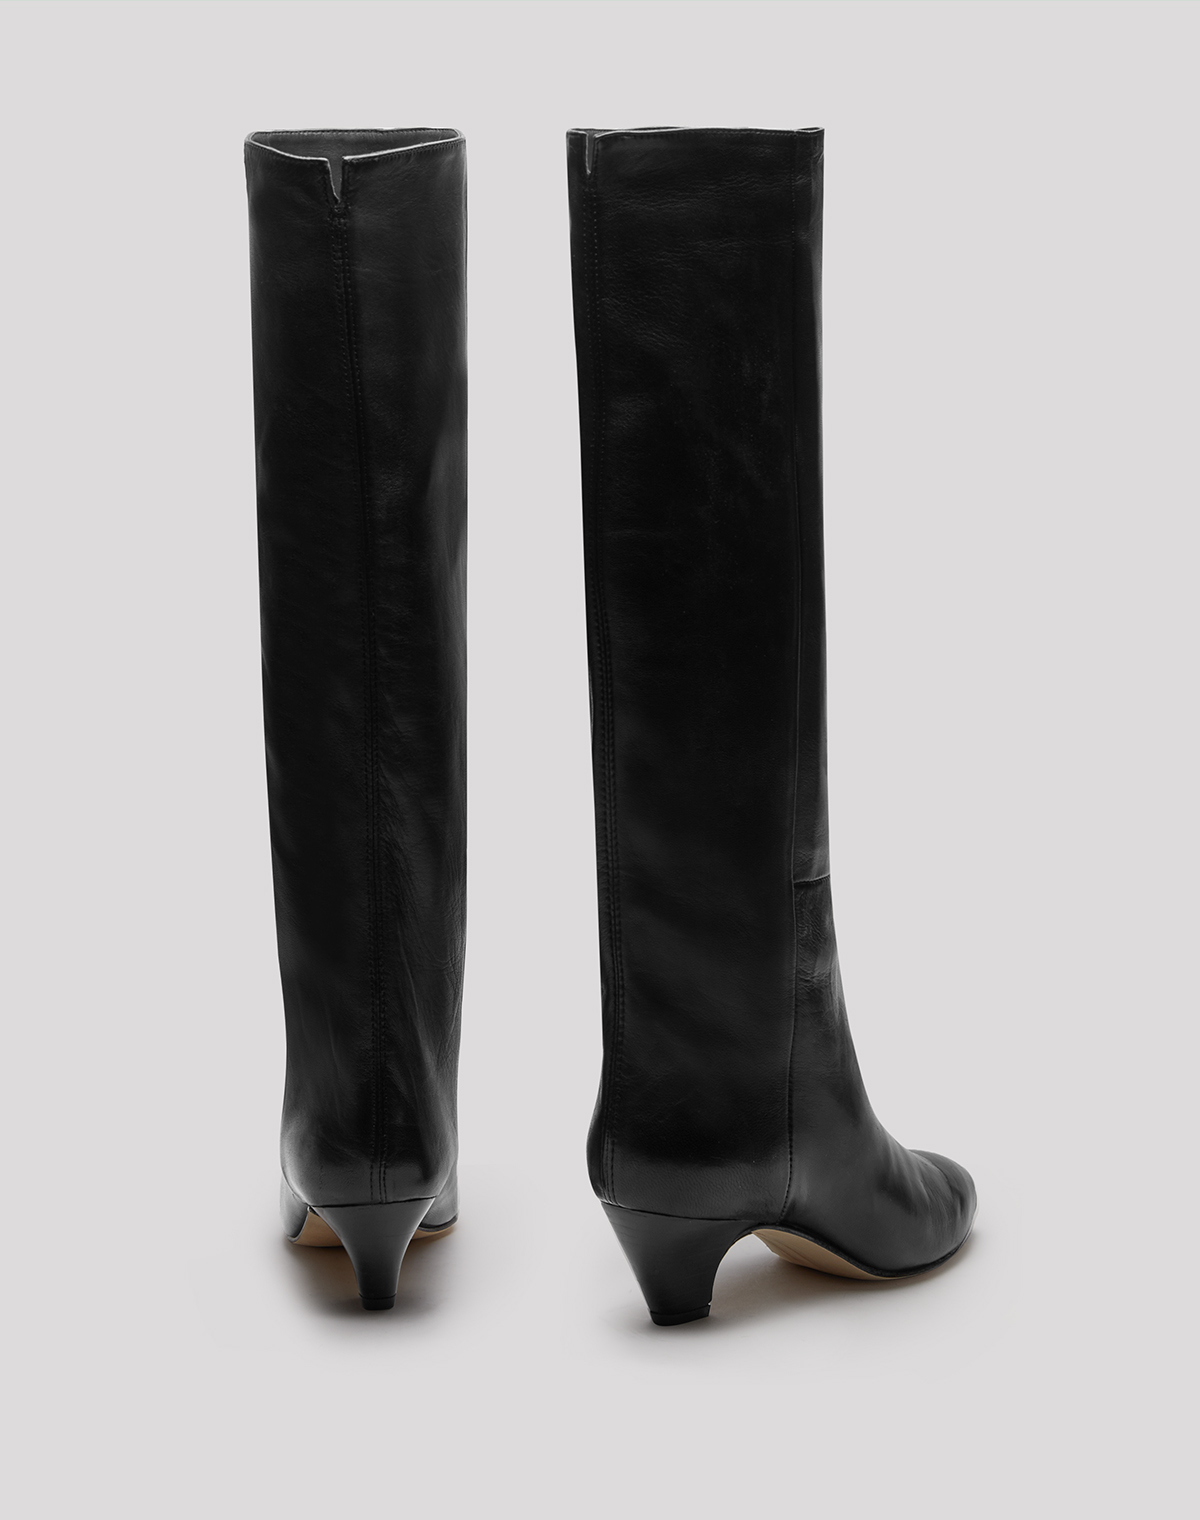 miista black boots